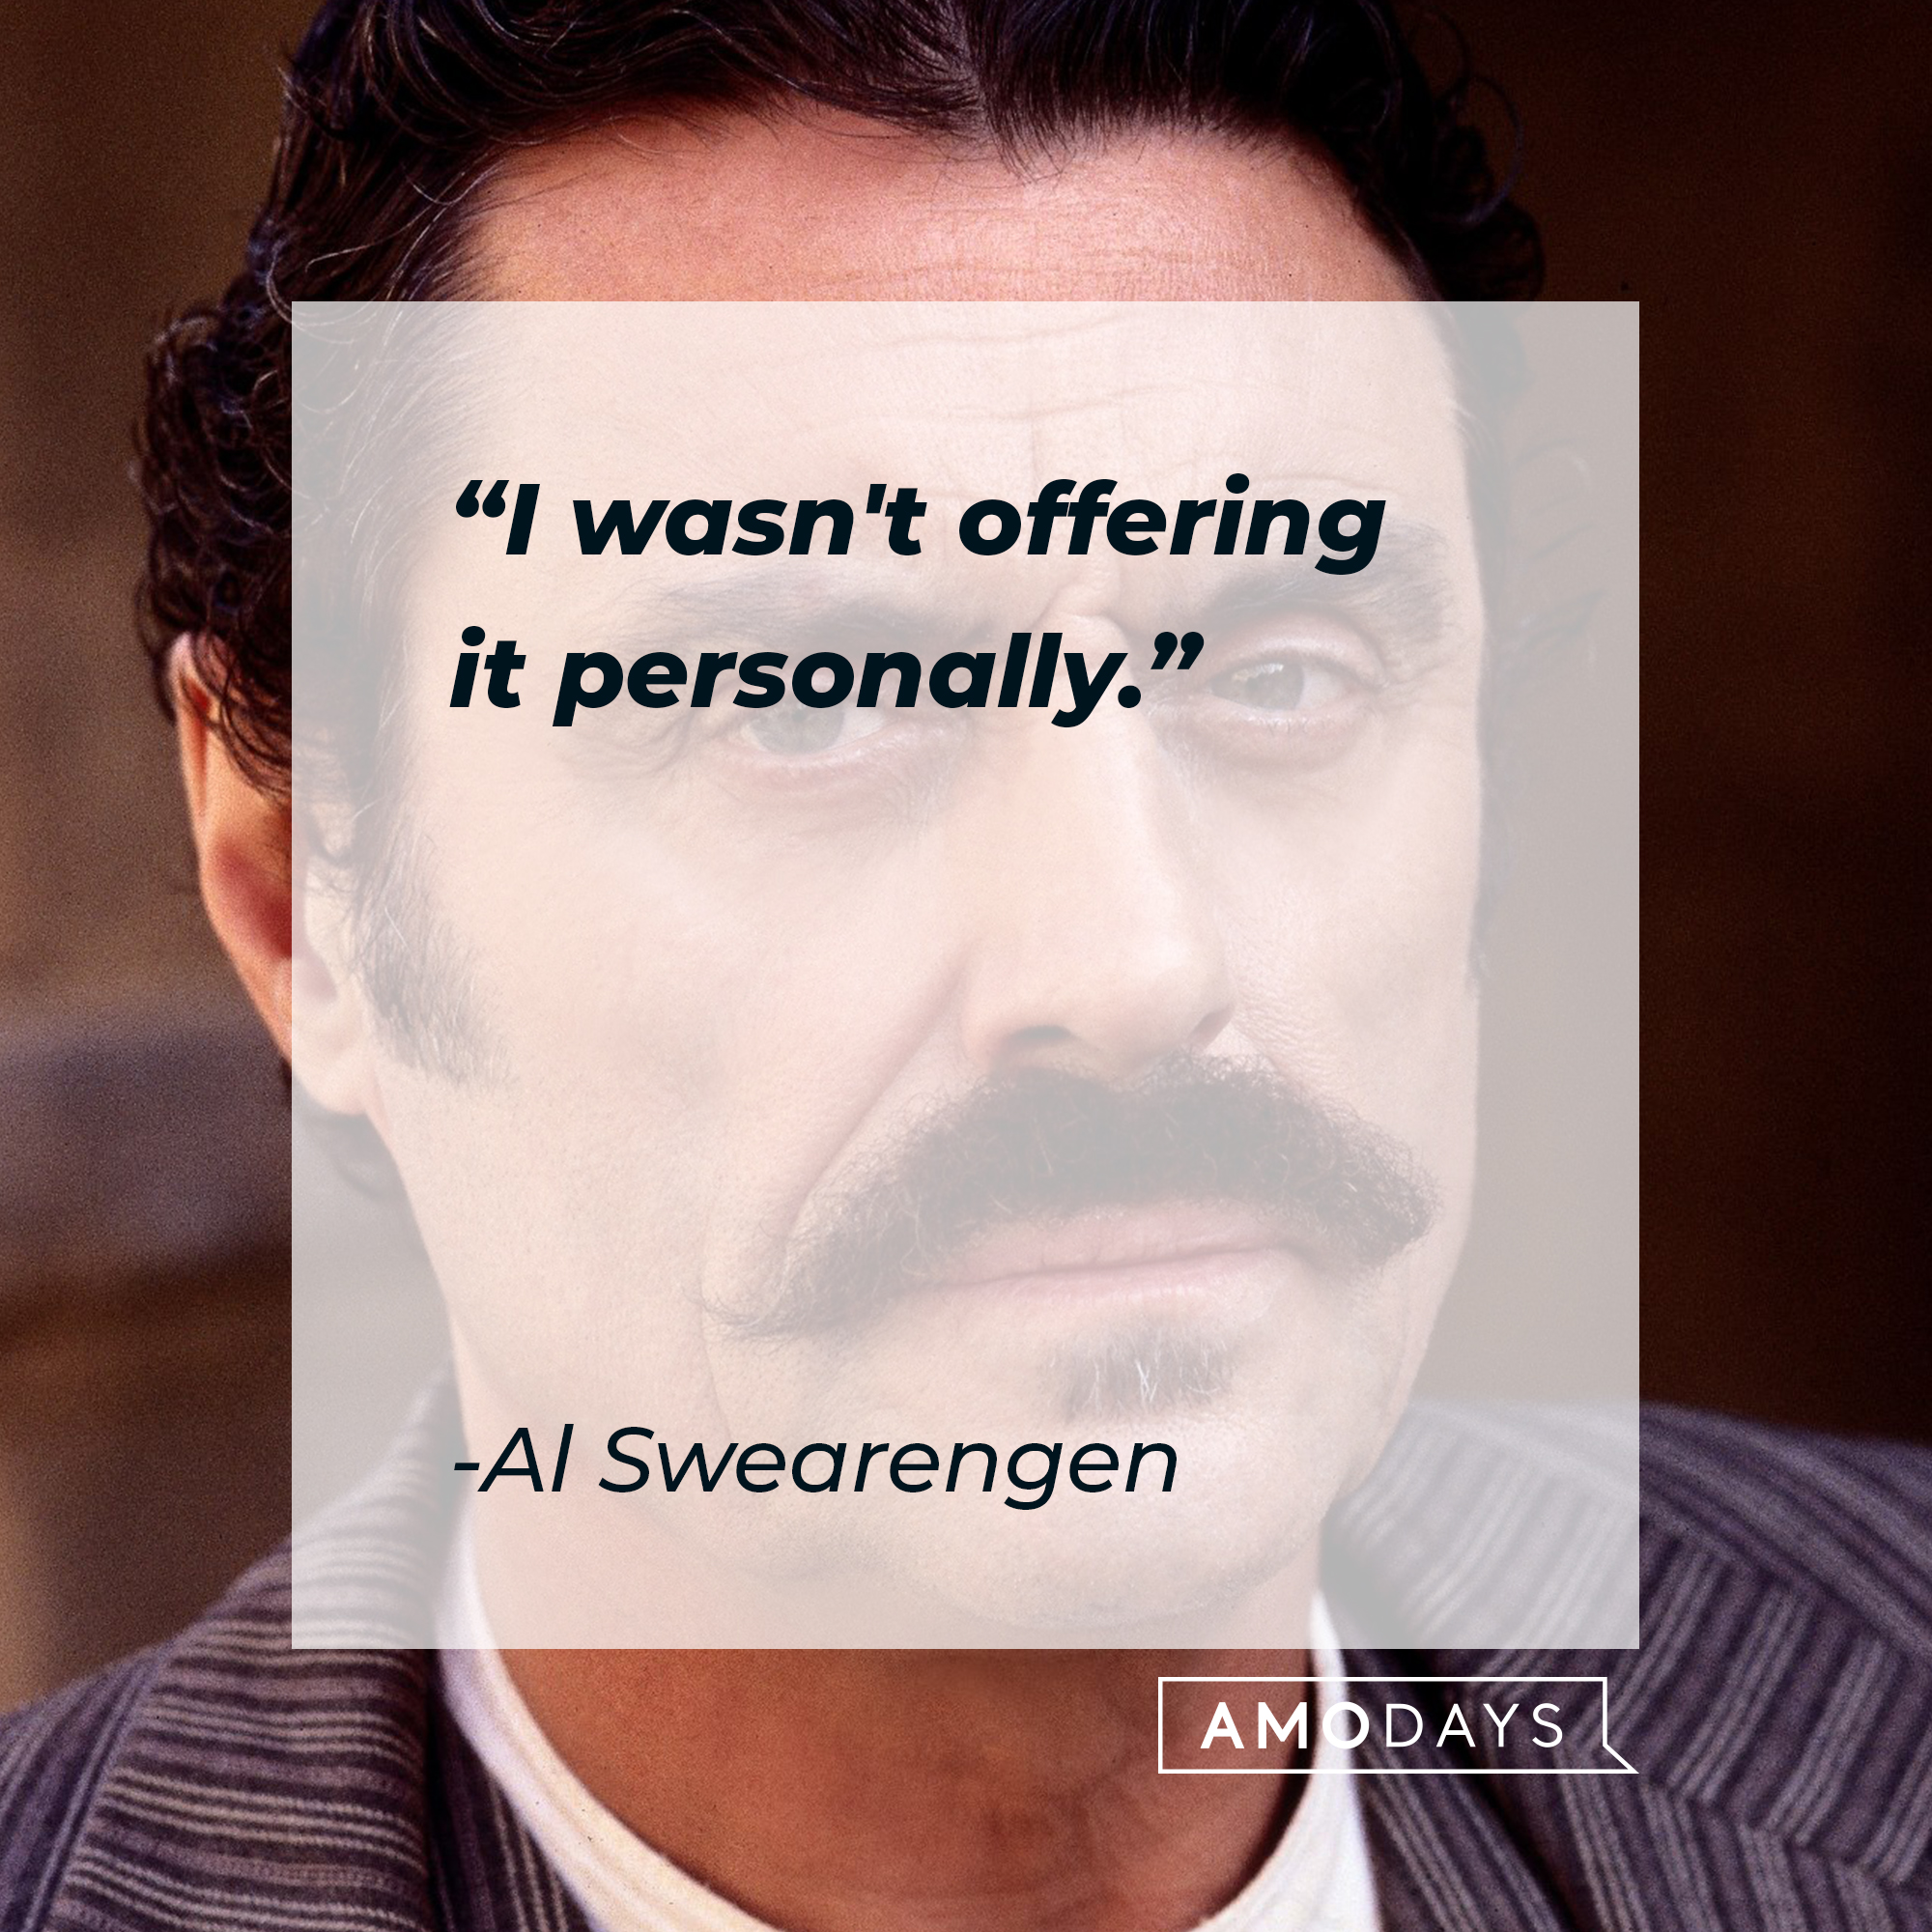 Al Swearengen with his quote, "I wasn't offering it personally." | Source: Facebook/Deadwood